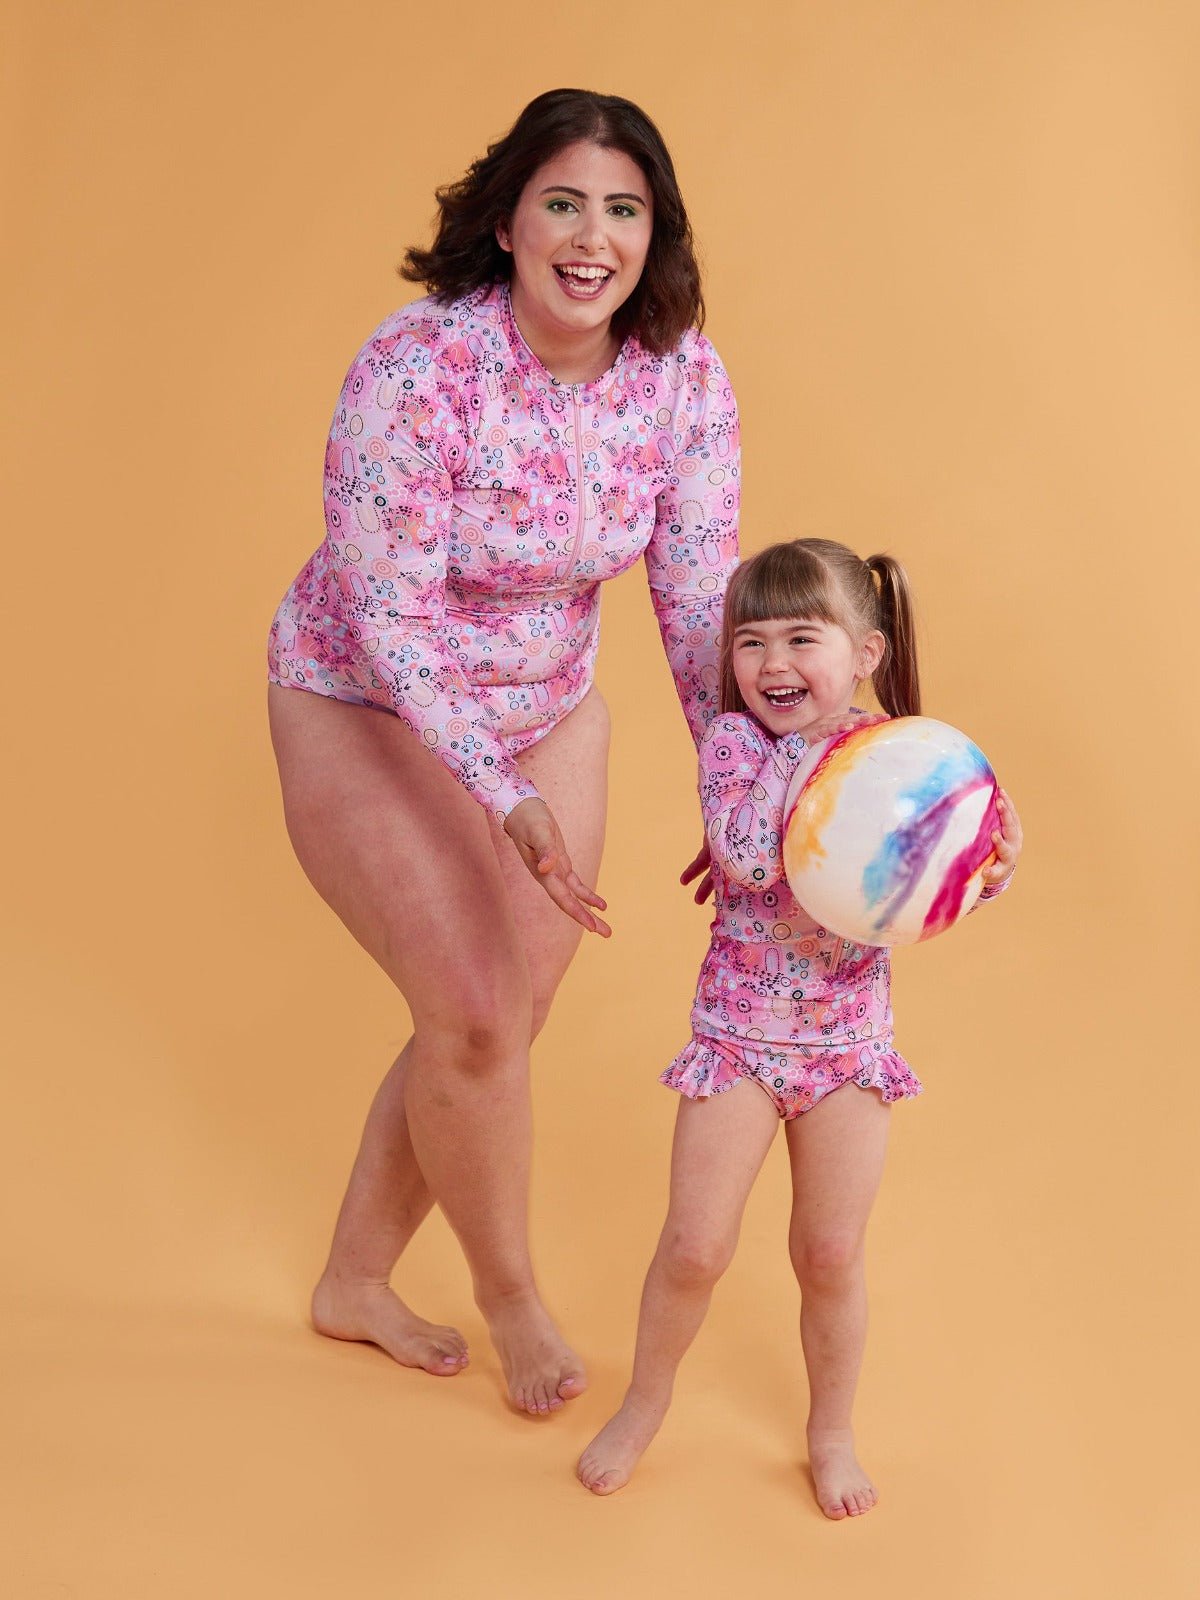 Strong Women Long-Sleeved Cropped Rashie Top - mama and mini matching family swimwear